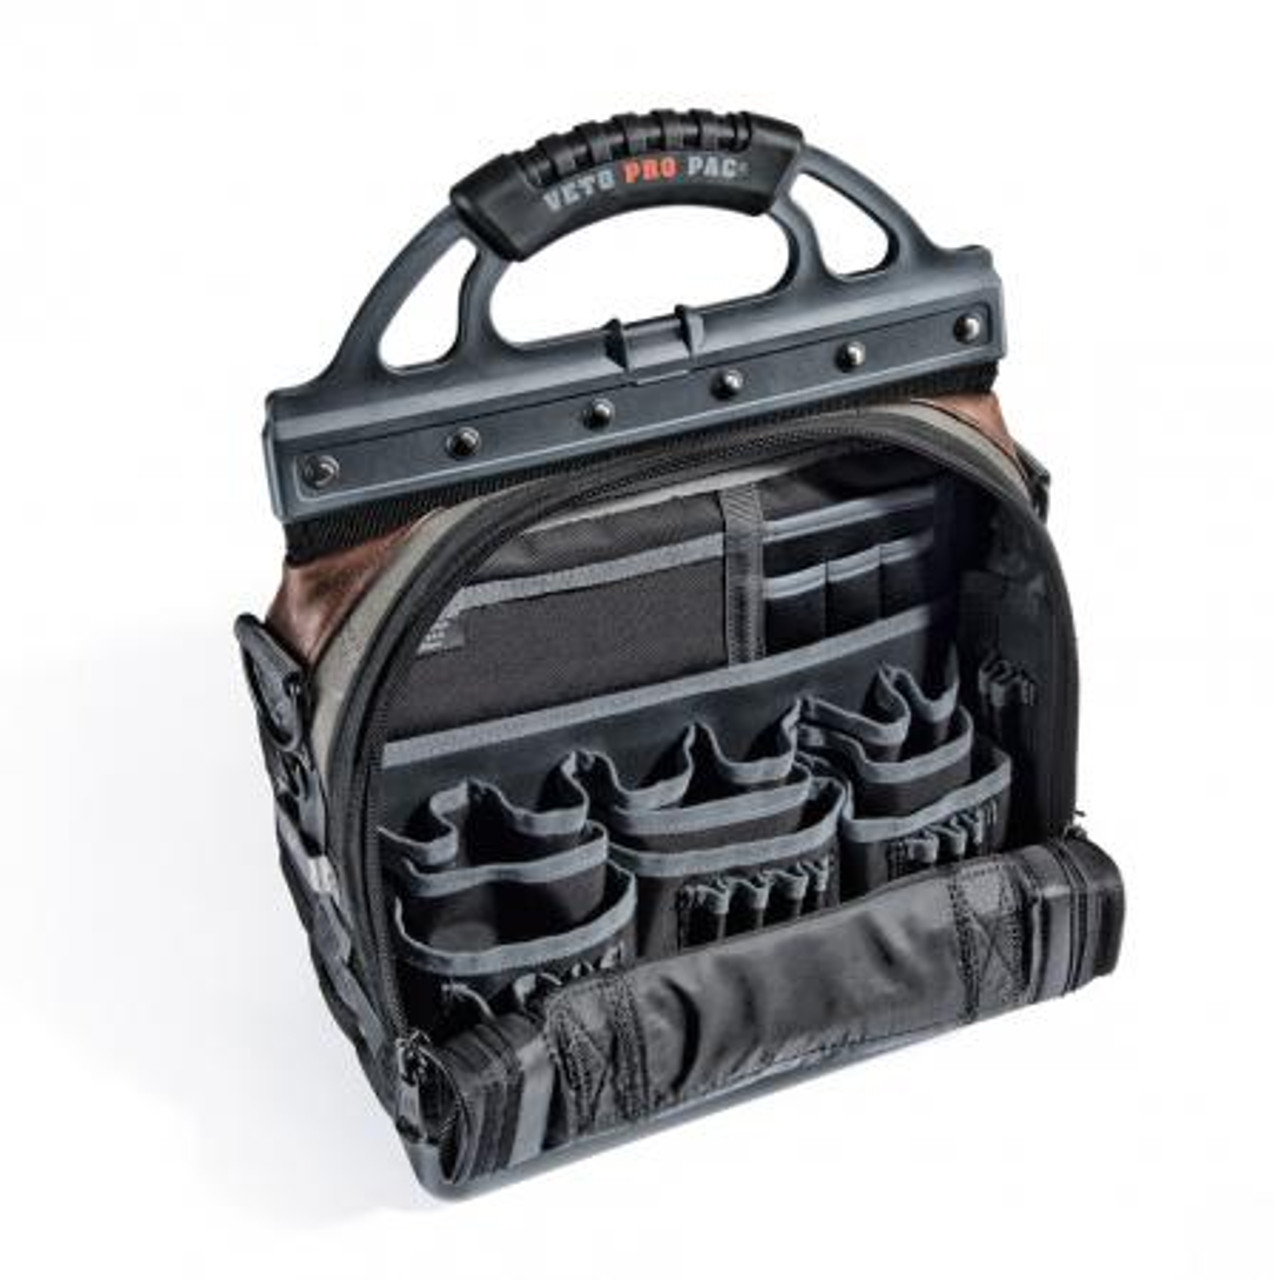 Veto Pro Pac LC Small Compact Tool Bag